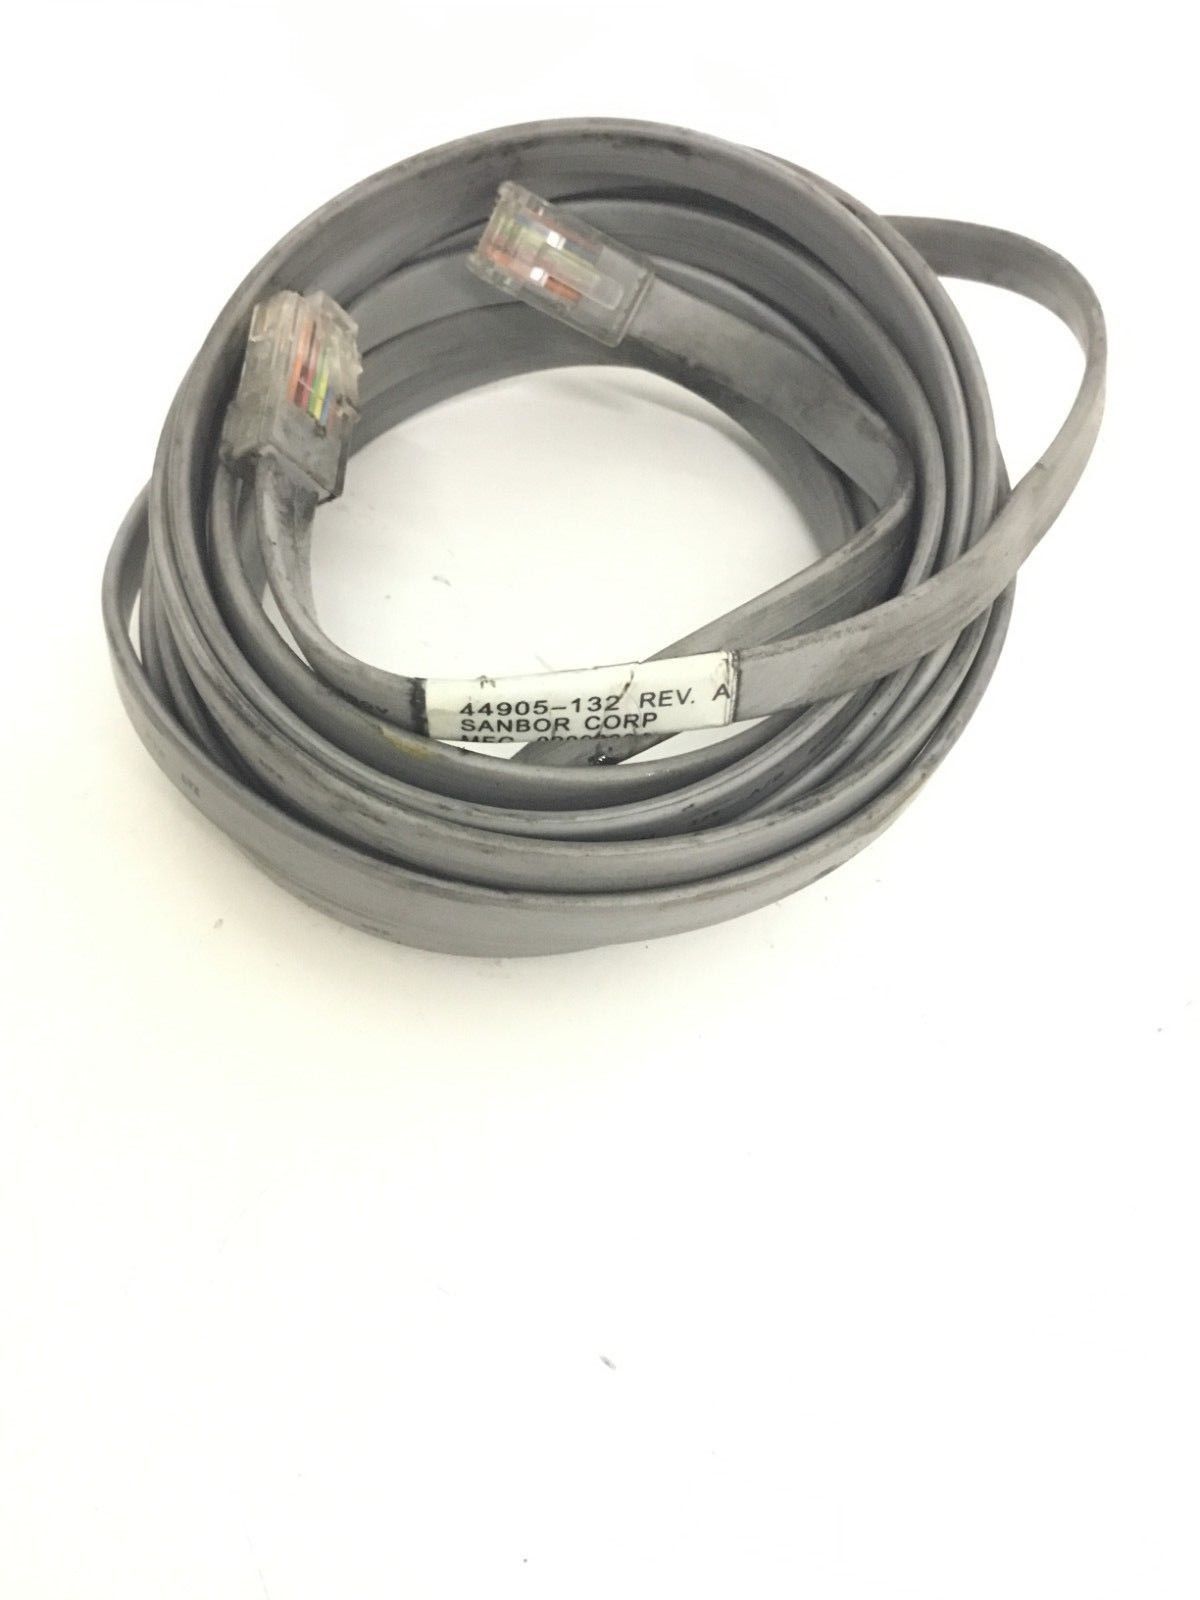 Precor C546i EFX 546i Elliptical Wire Harness 44905-132 (Used)